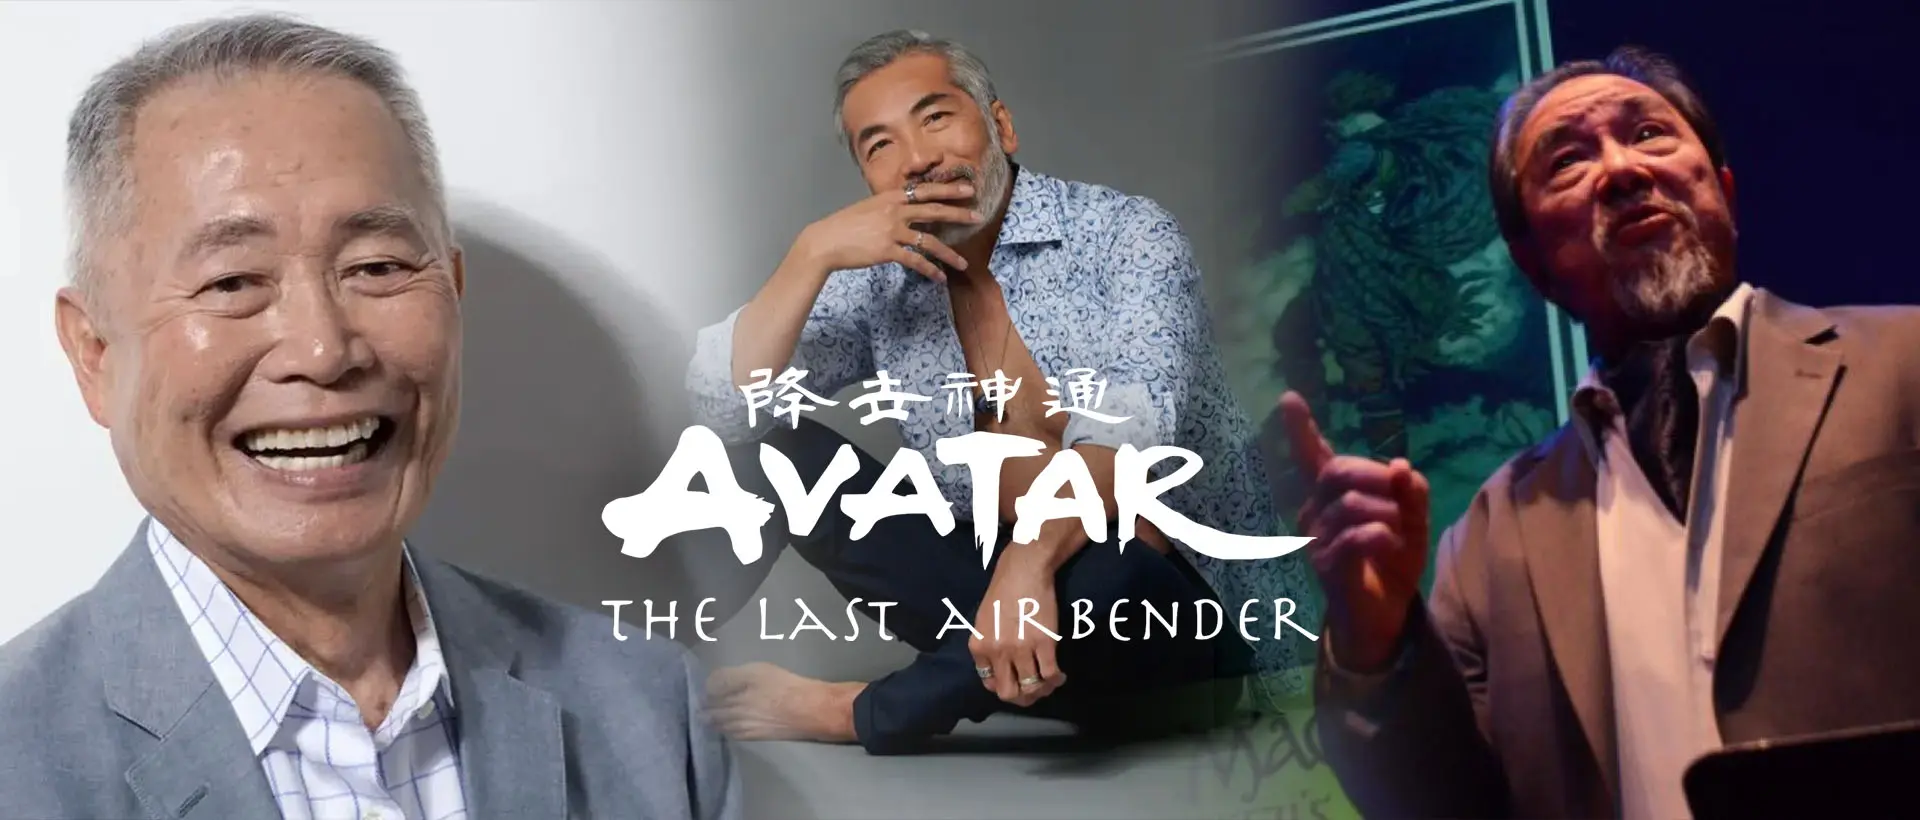 George Takei Hiro Kanagawa Randall Duk Kim avatar the last airbender